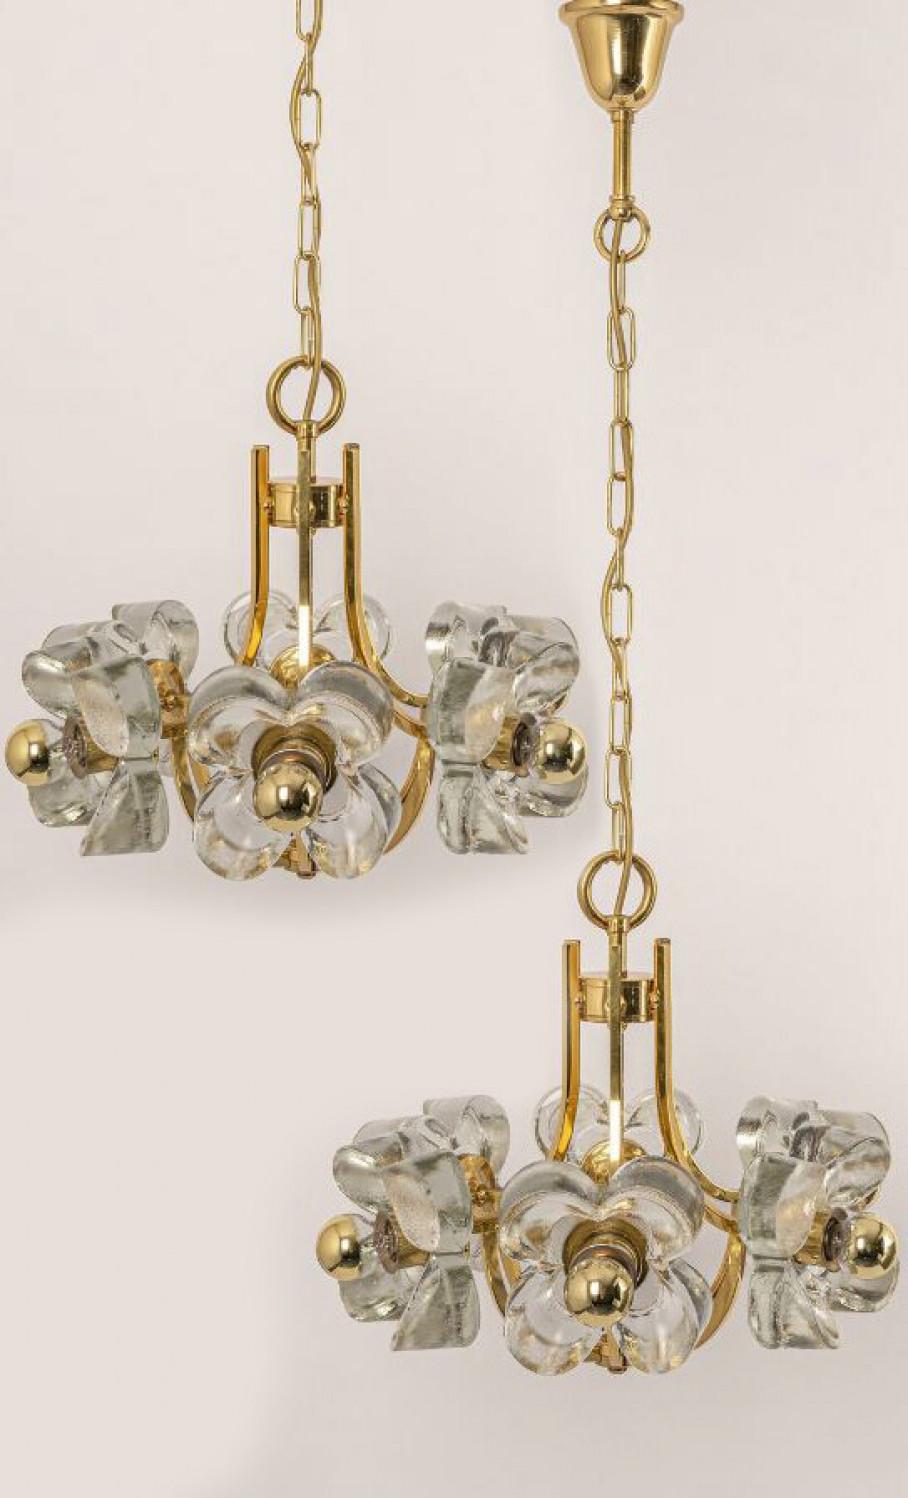 Mid-Century Modern 1 of 2 Sische Glass and Brass Chandelier, 1960s Modernist Design, Kalmar Style For Sale